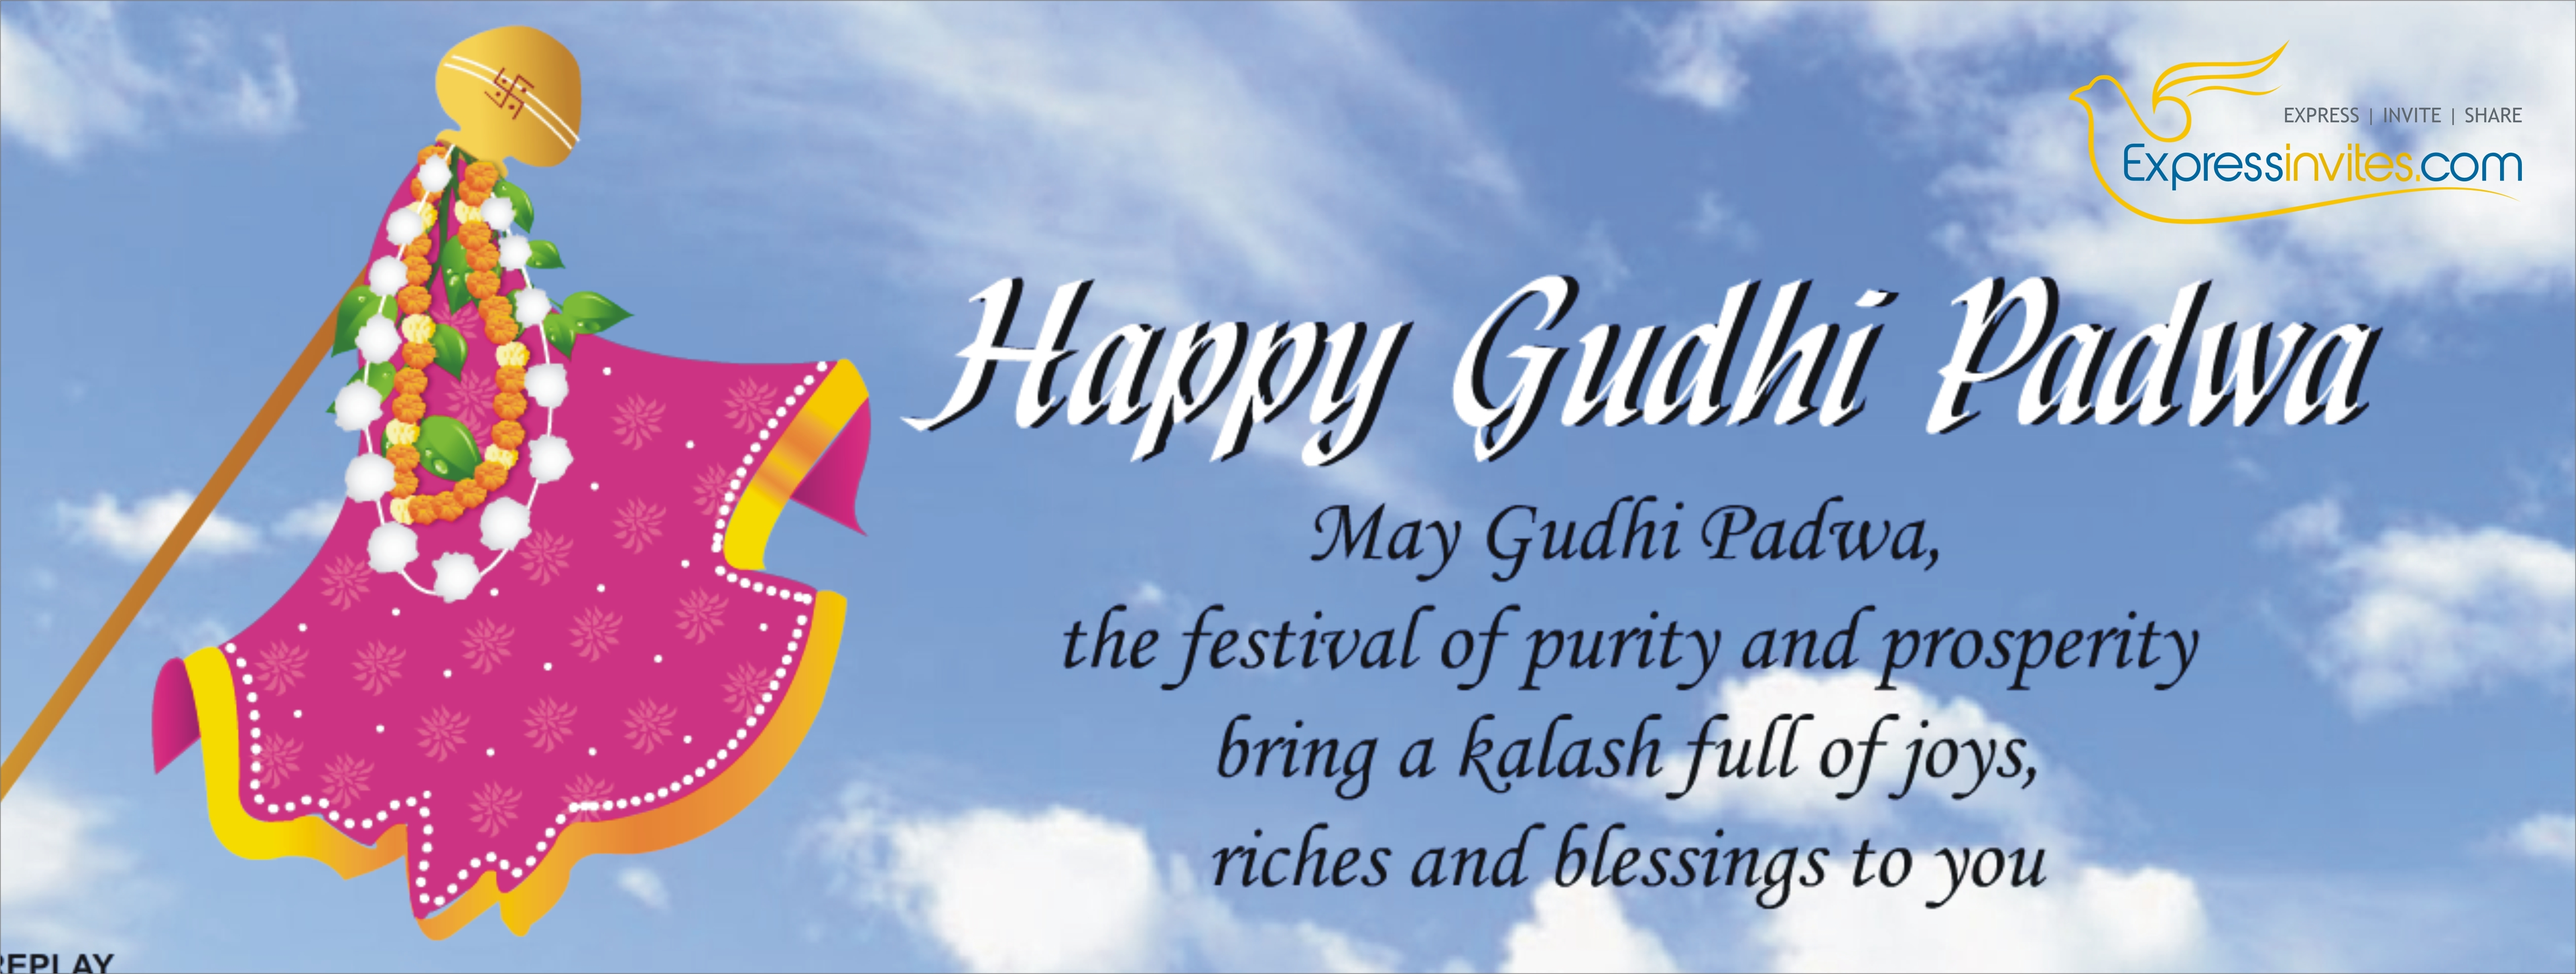 Happy Gudi Padwa May Gurdi Padwa The Festival Of Purity And Prosperity Bring Kalash Full Of Joys